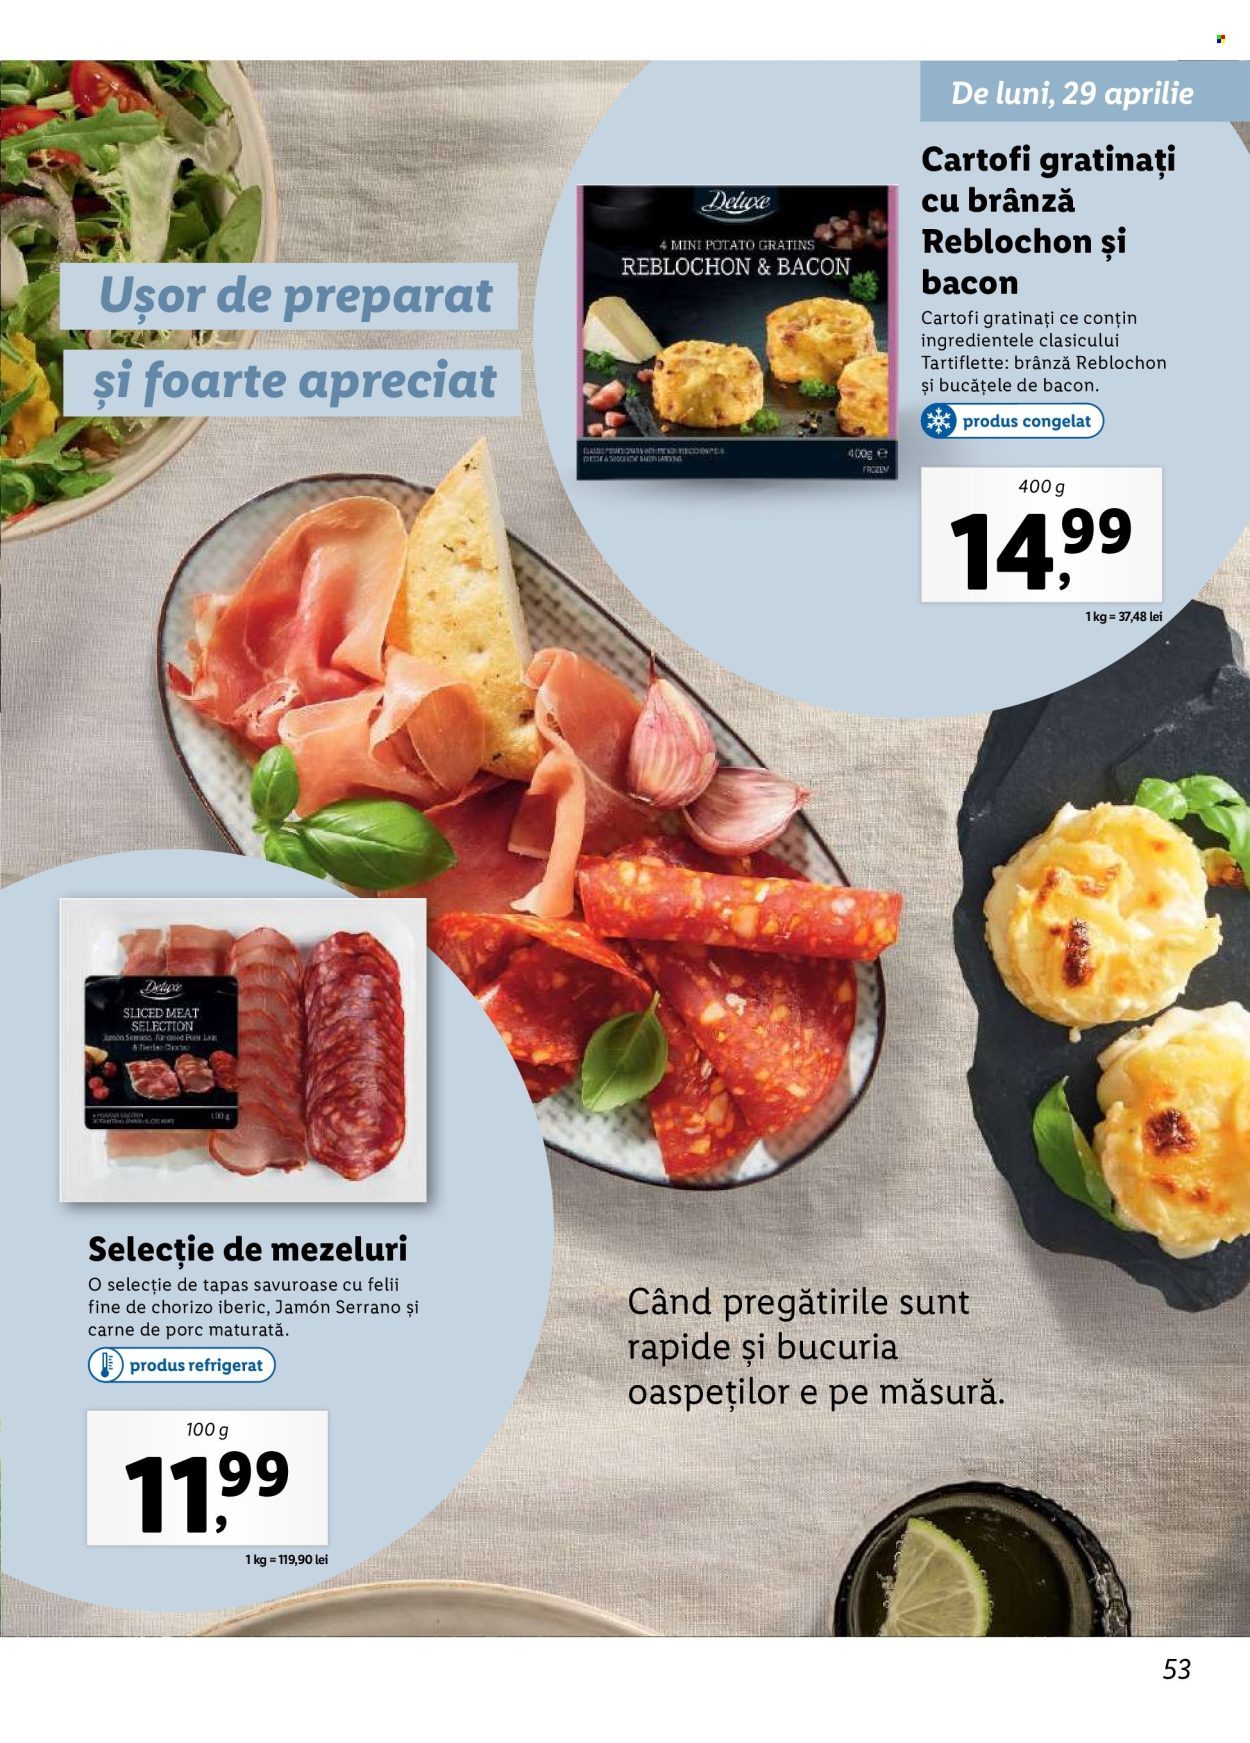 thumbnail - Cataloage Lidl - Produse în vânzare - cartofi gratinați, bacon, jamón serrano, chorizo, reblochon, Frozen. Pagina 53.